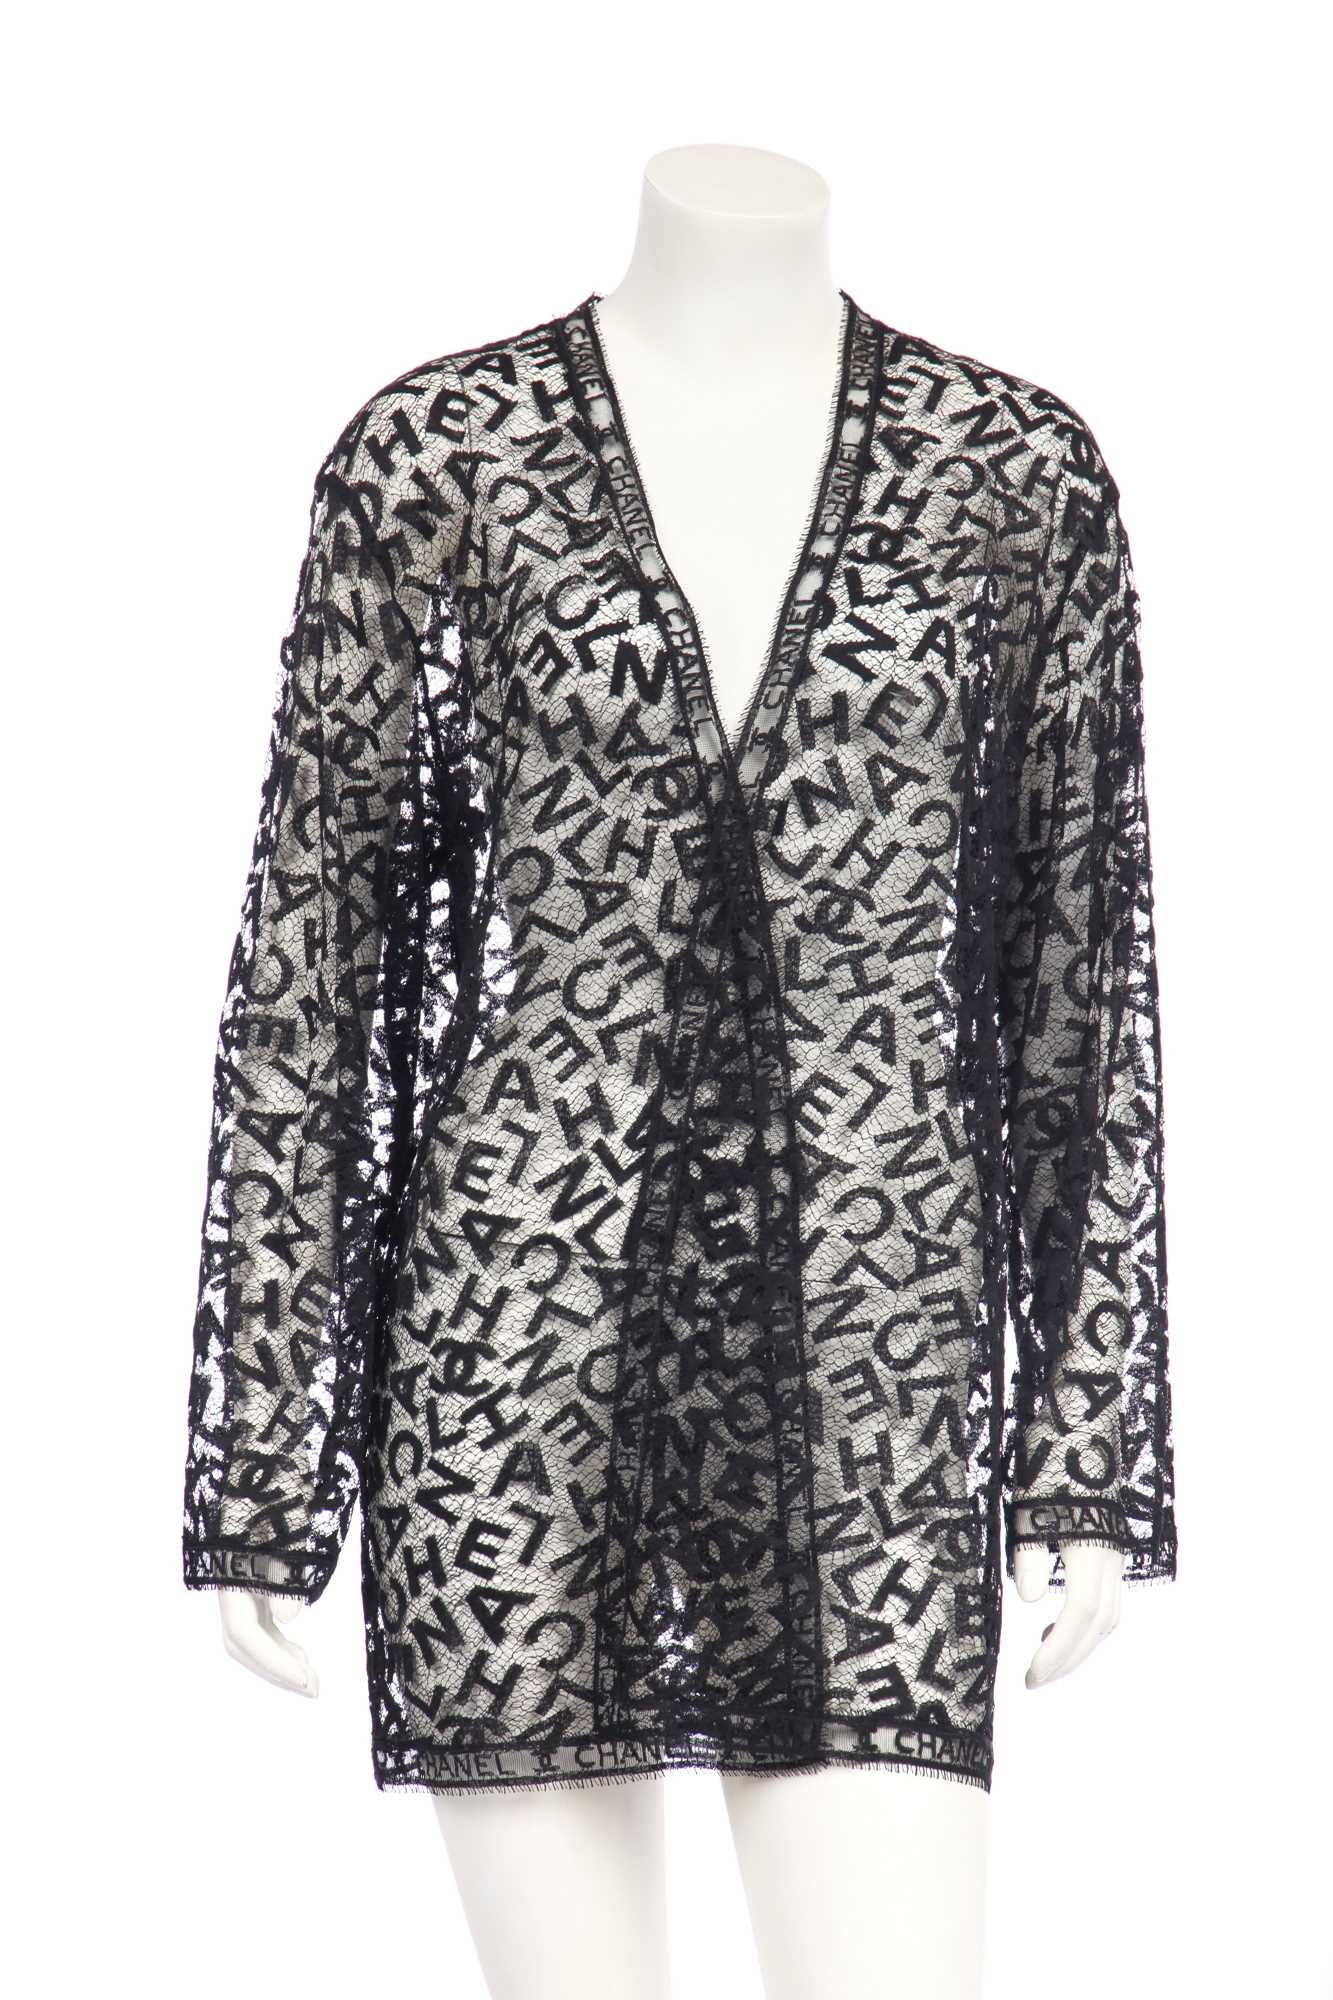 Lot 45 - A Chanel black lace jacket, 1990s